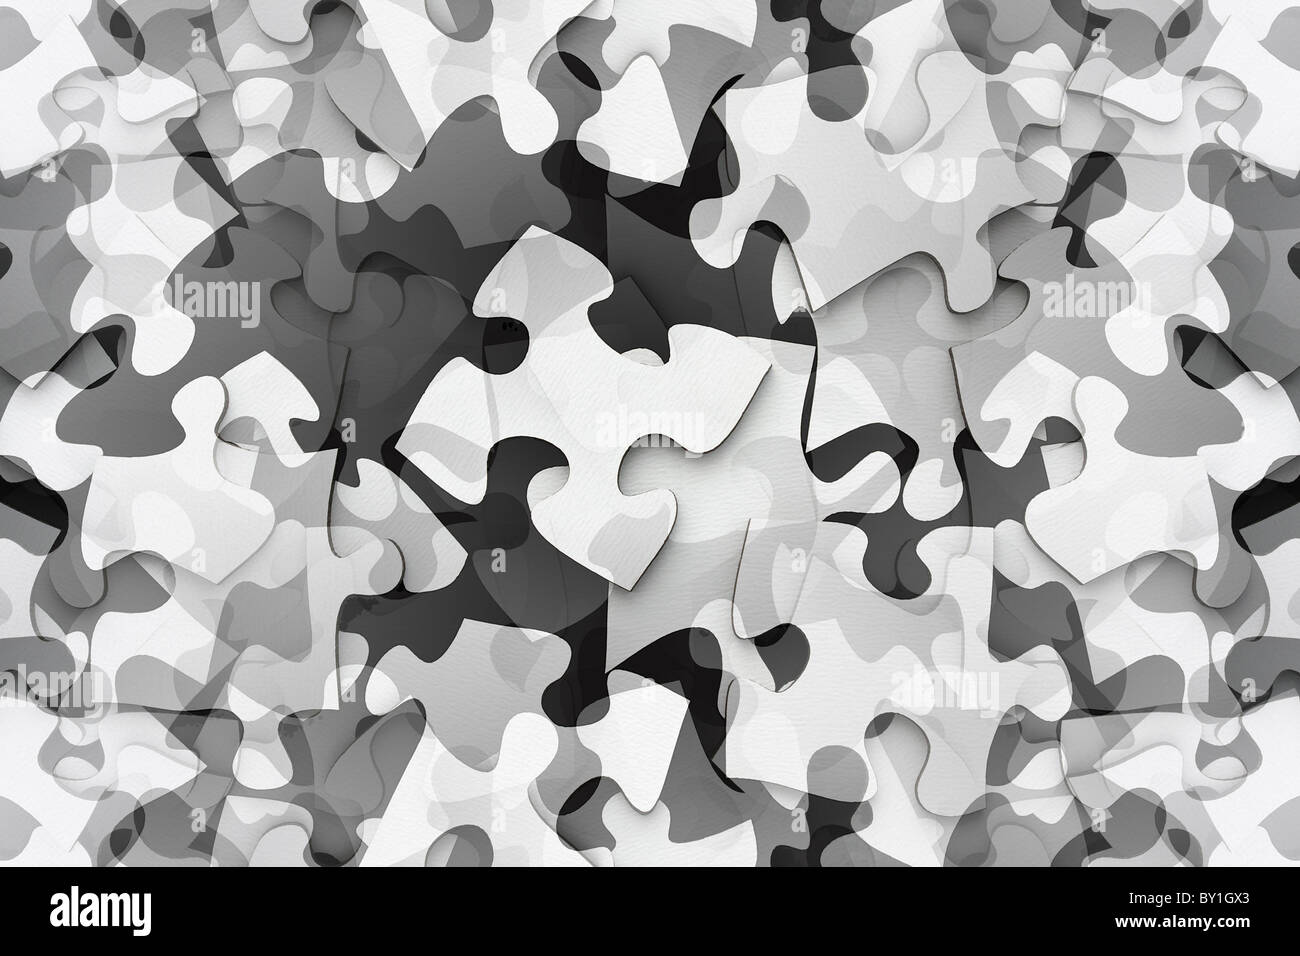 digital enhancement - parts of jigsaw puzzle - symbolism for existential orientation resp. education Stock Photo